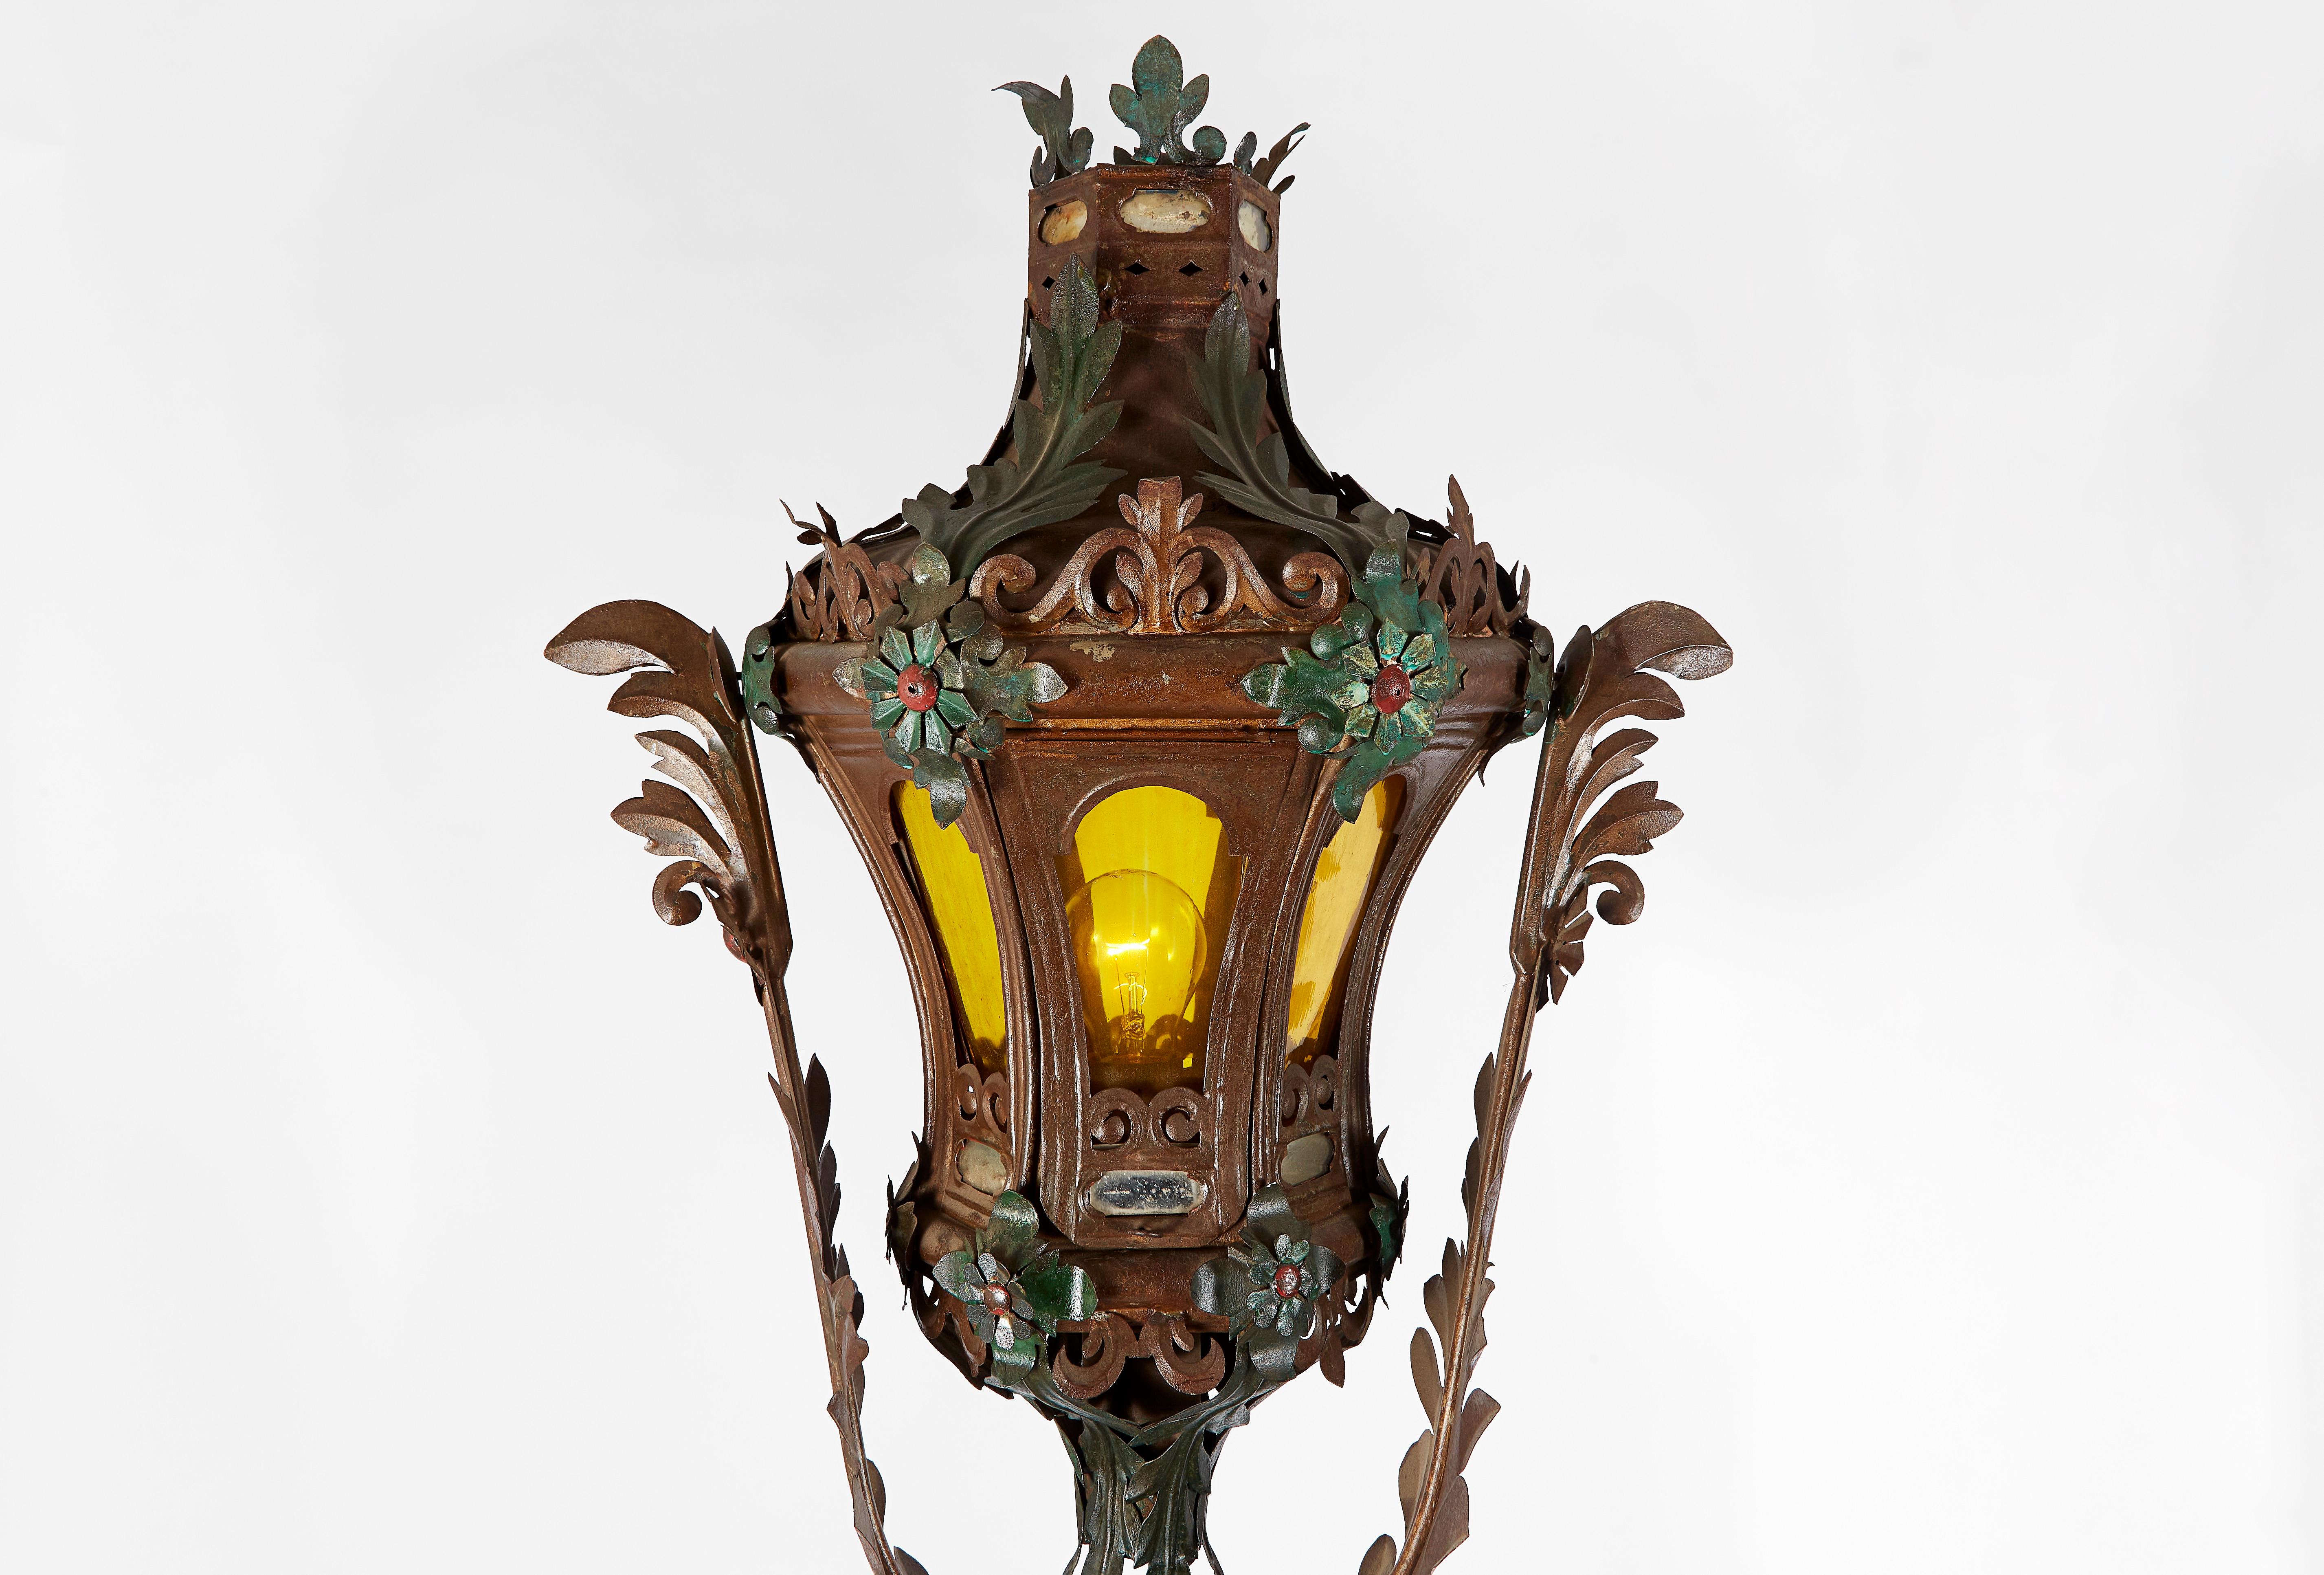 European Pair of Venetian Lanterns 19th Century Italian Gondola Lamps Baroque Style